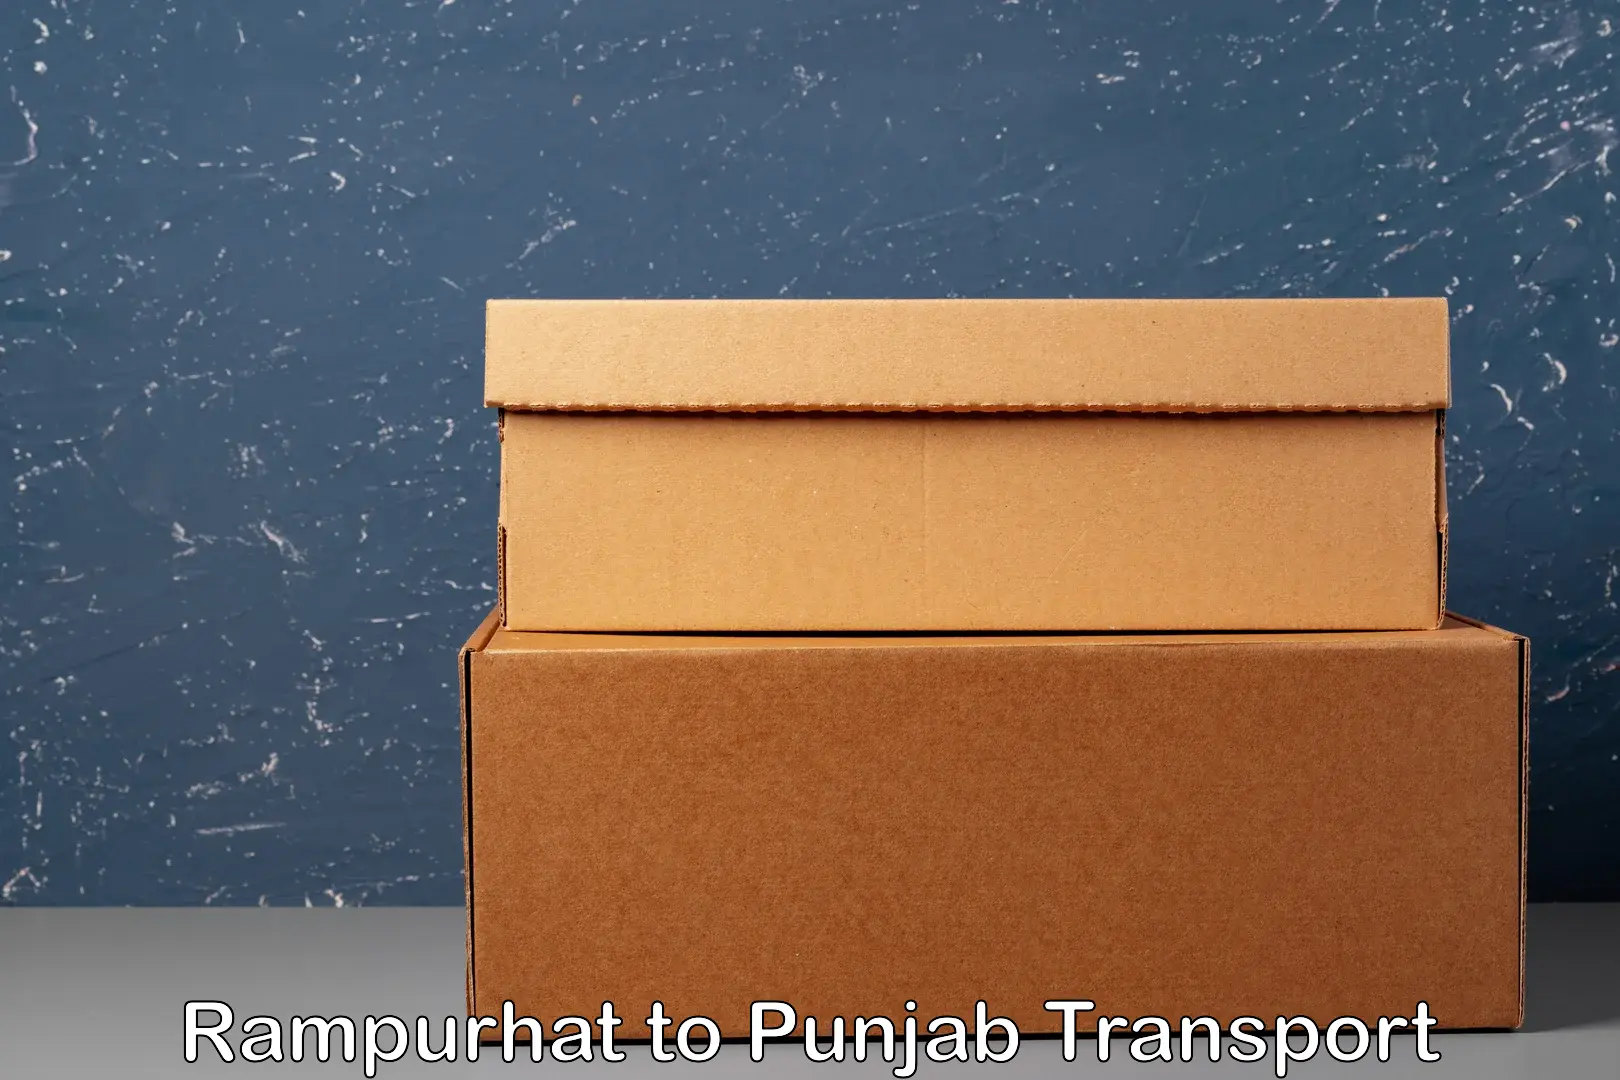 Nearby transport service Rampurhat to Punjab